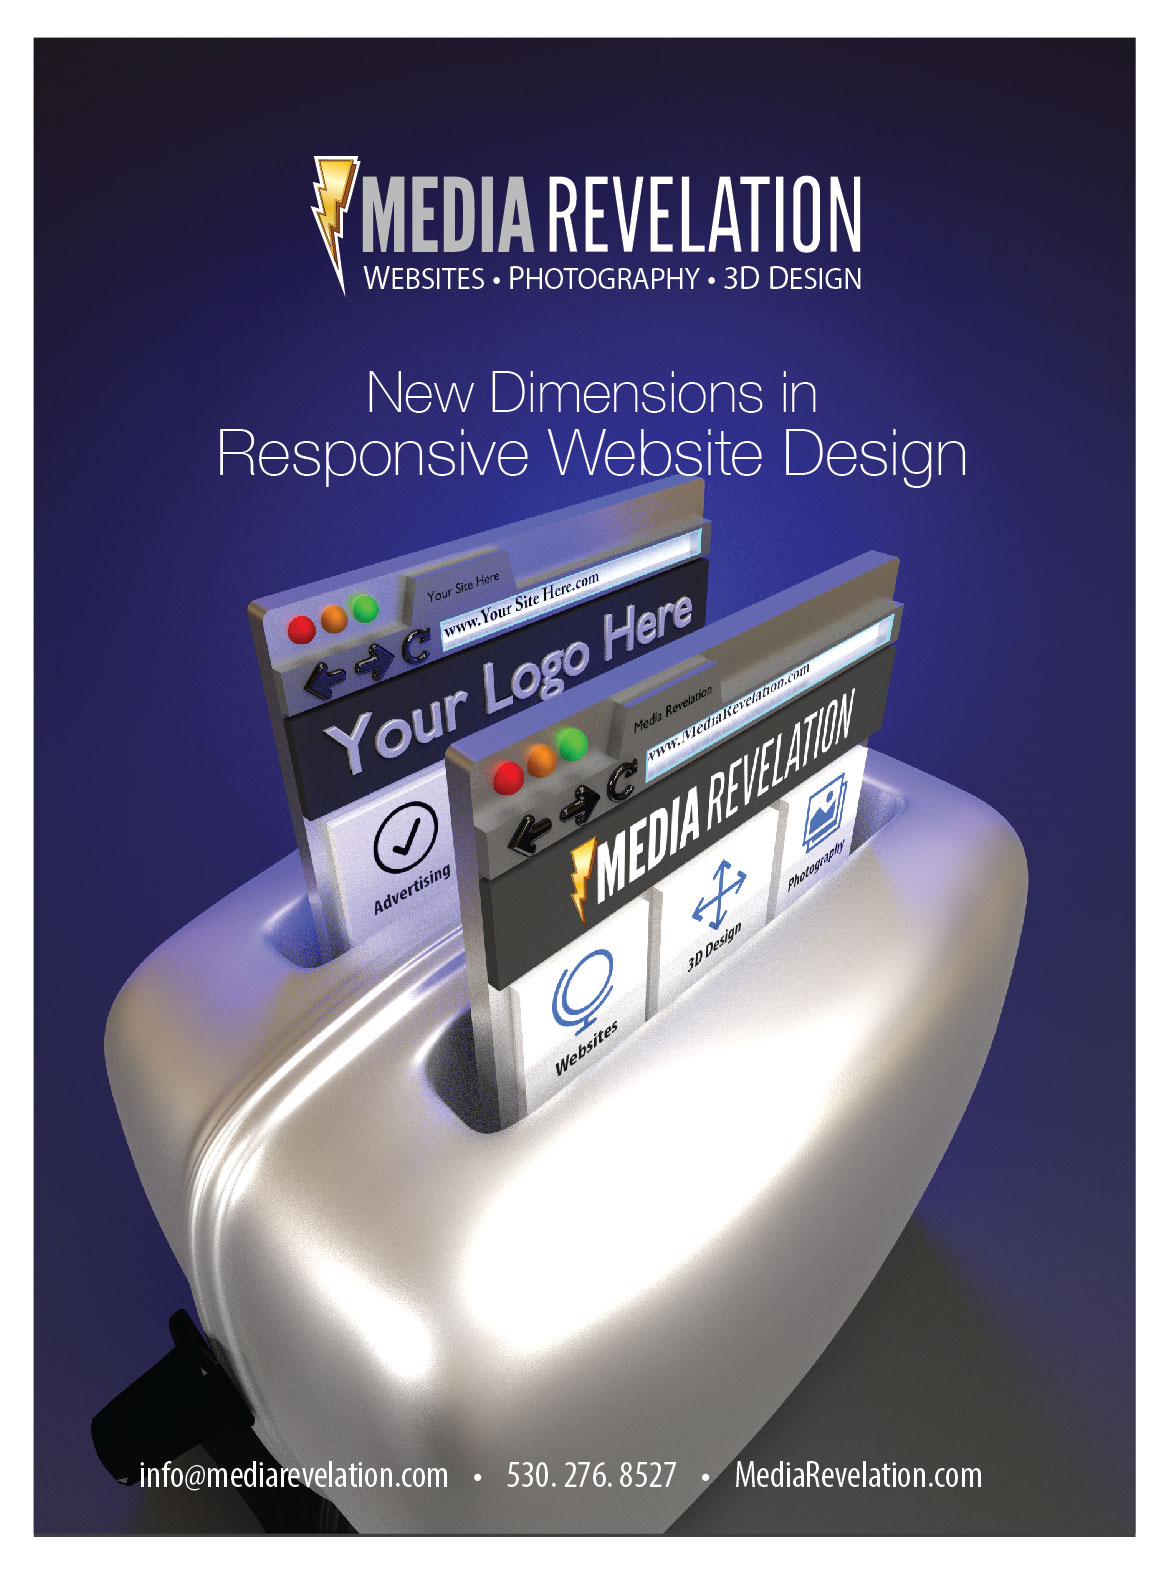 Media Revelation - Print Ad Design - Responsive website design